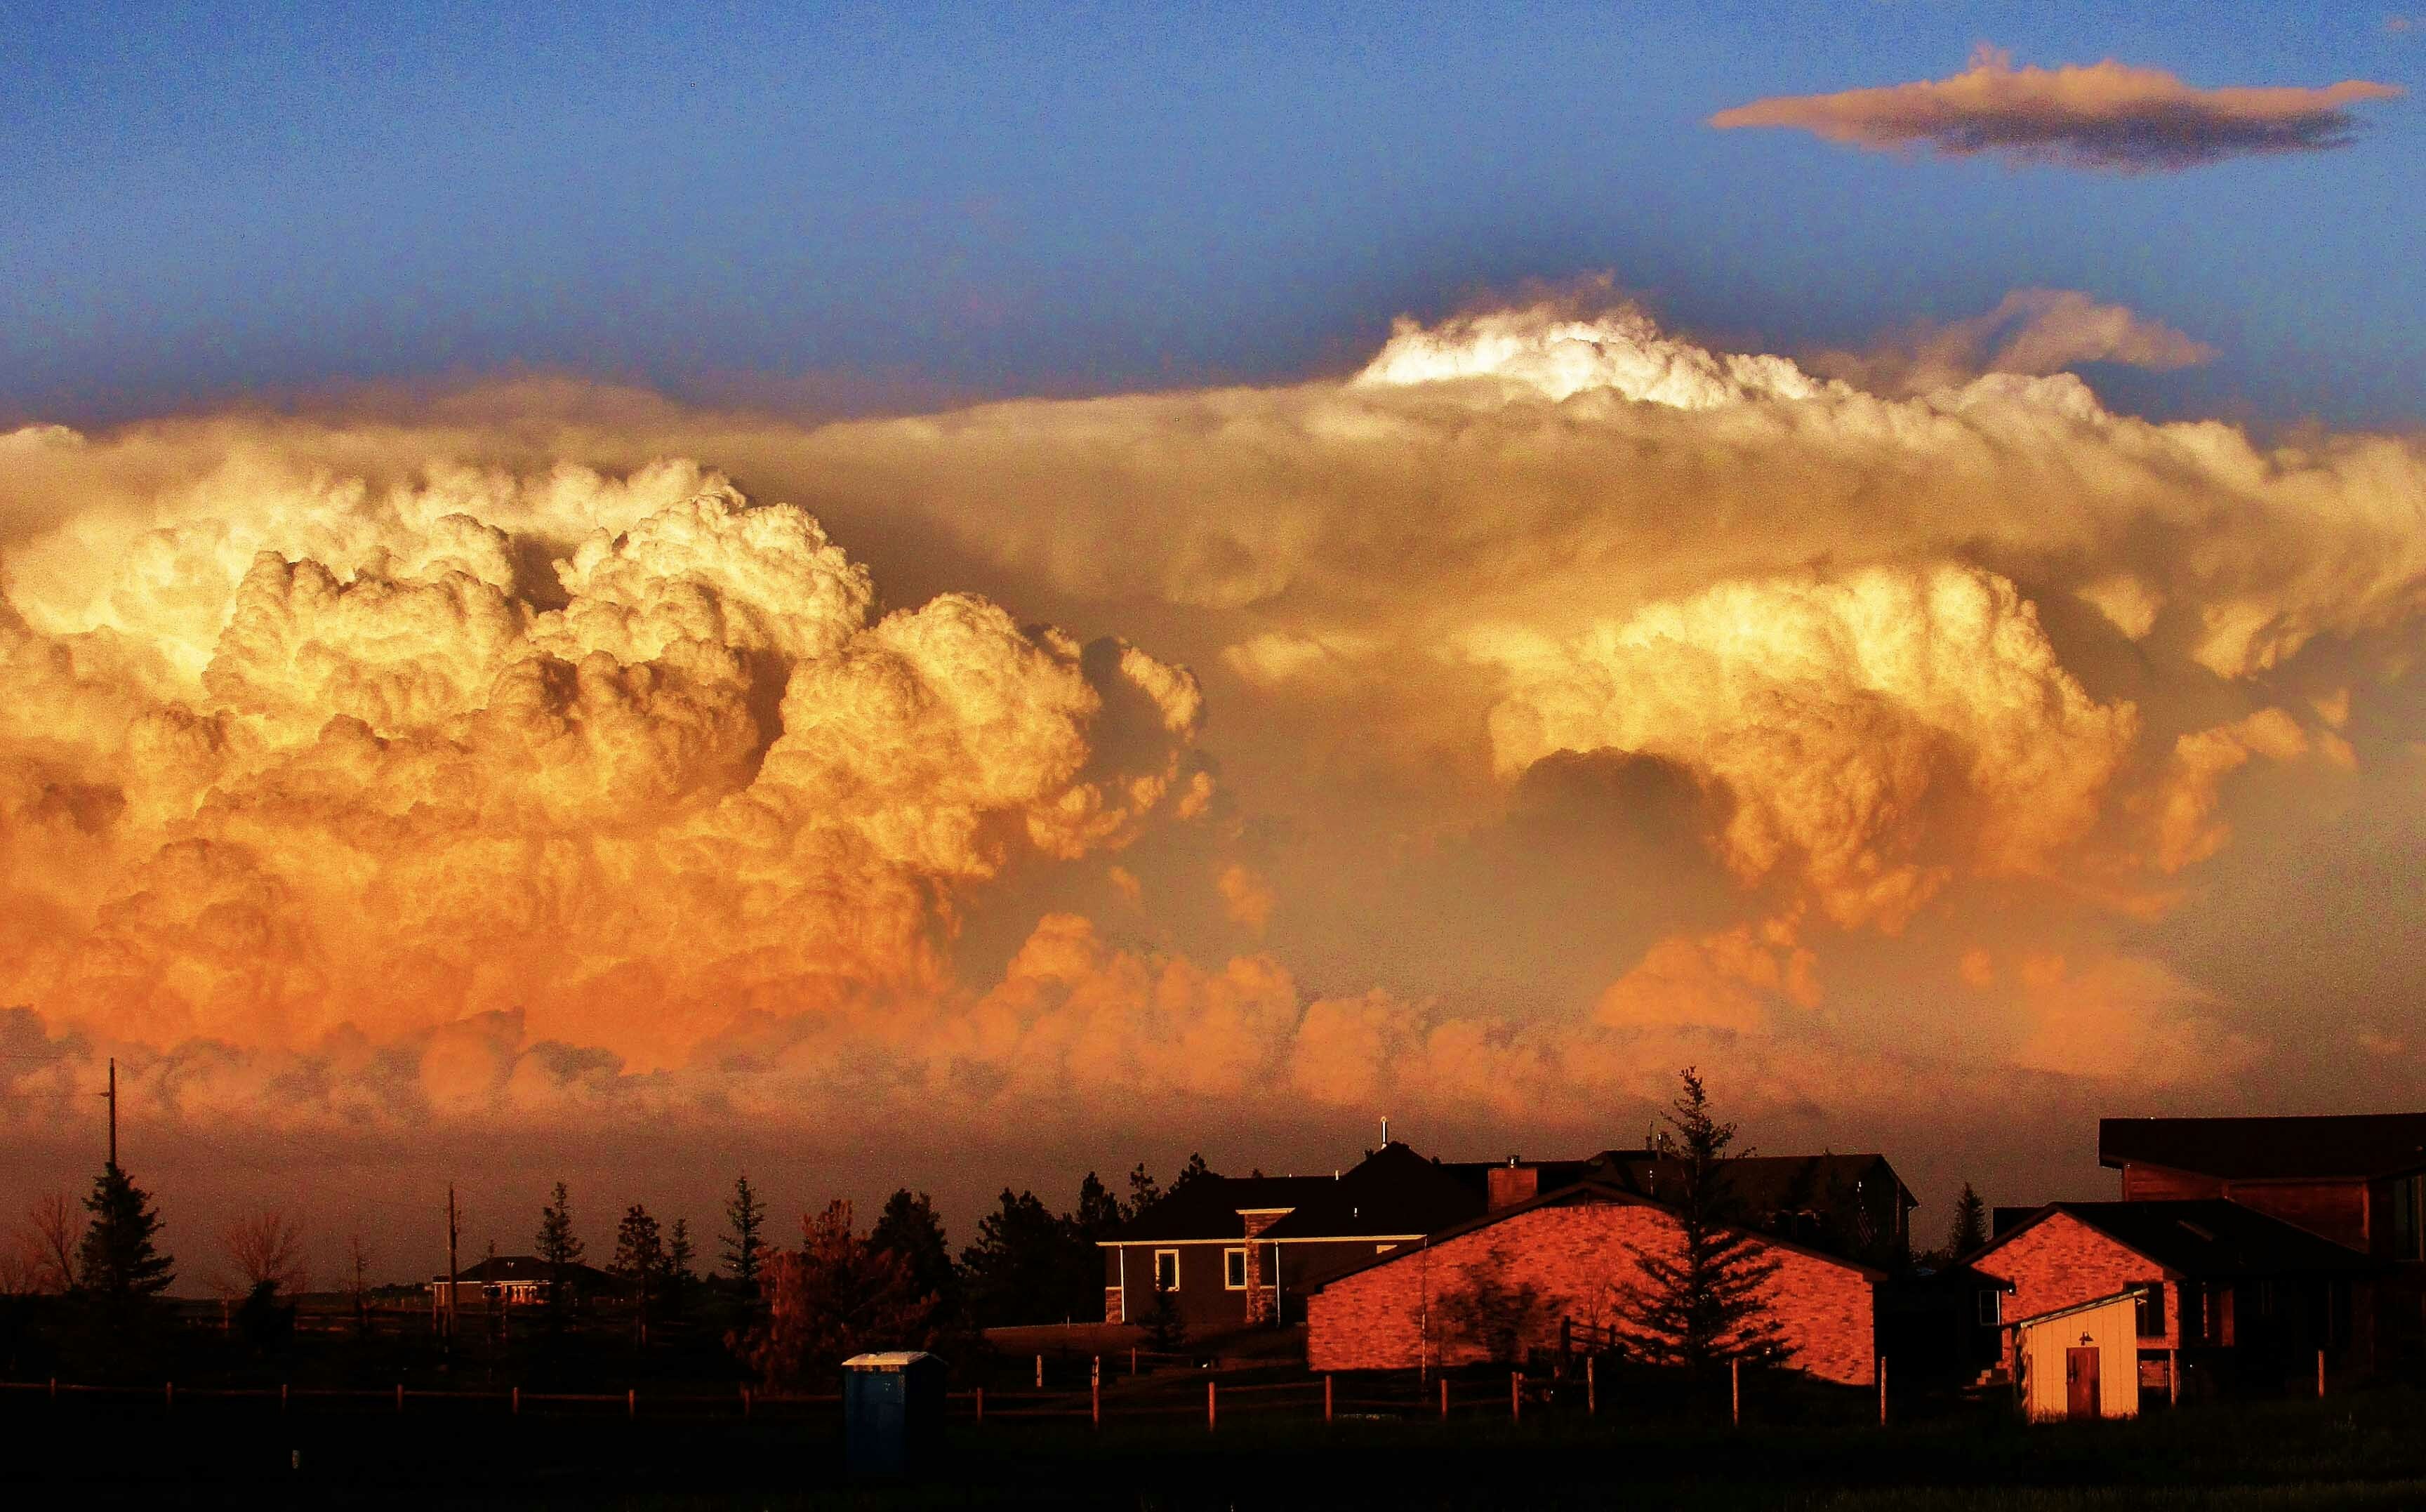 Supercell thunderheads at sunset. Taken near Horse Creek Road in Cheyenne.